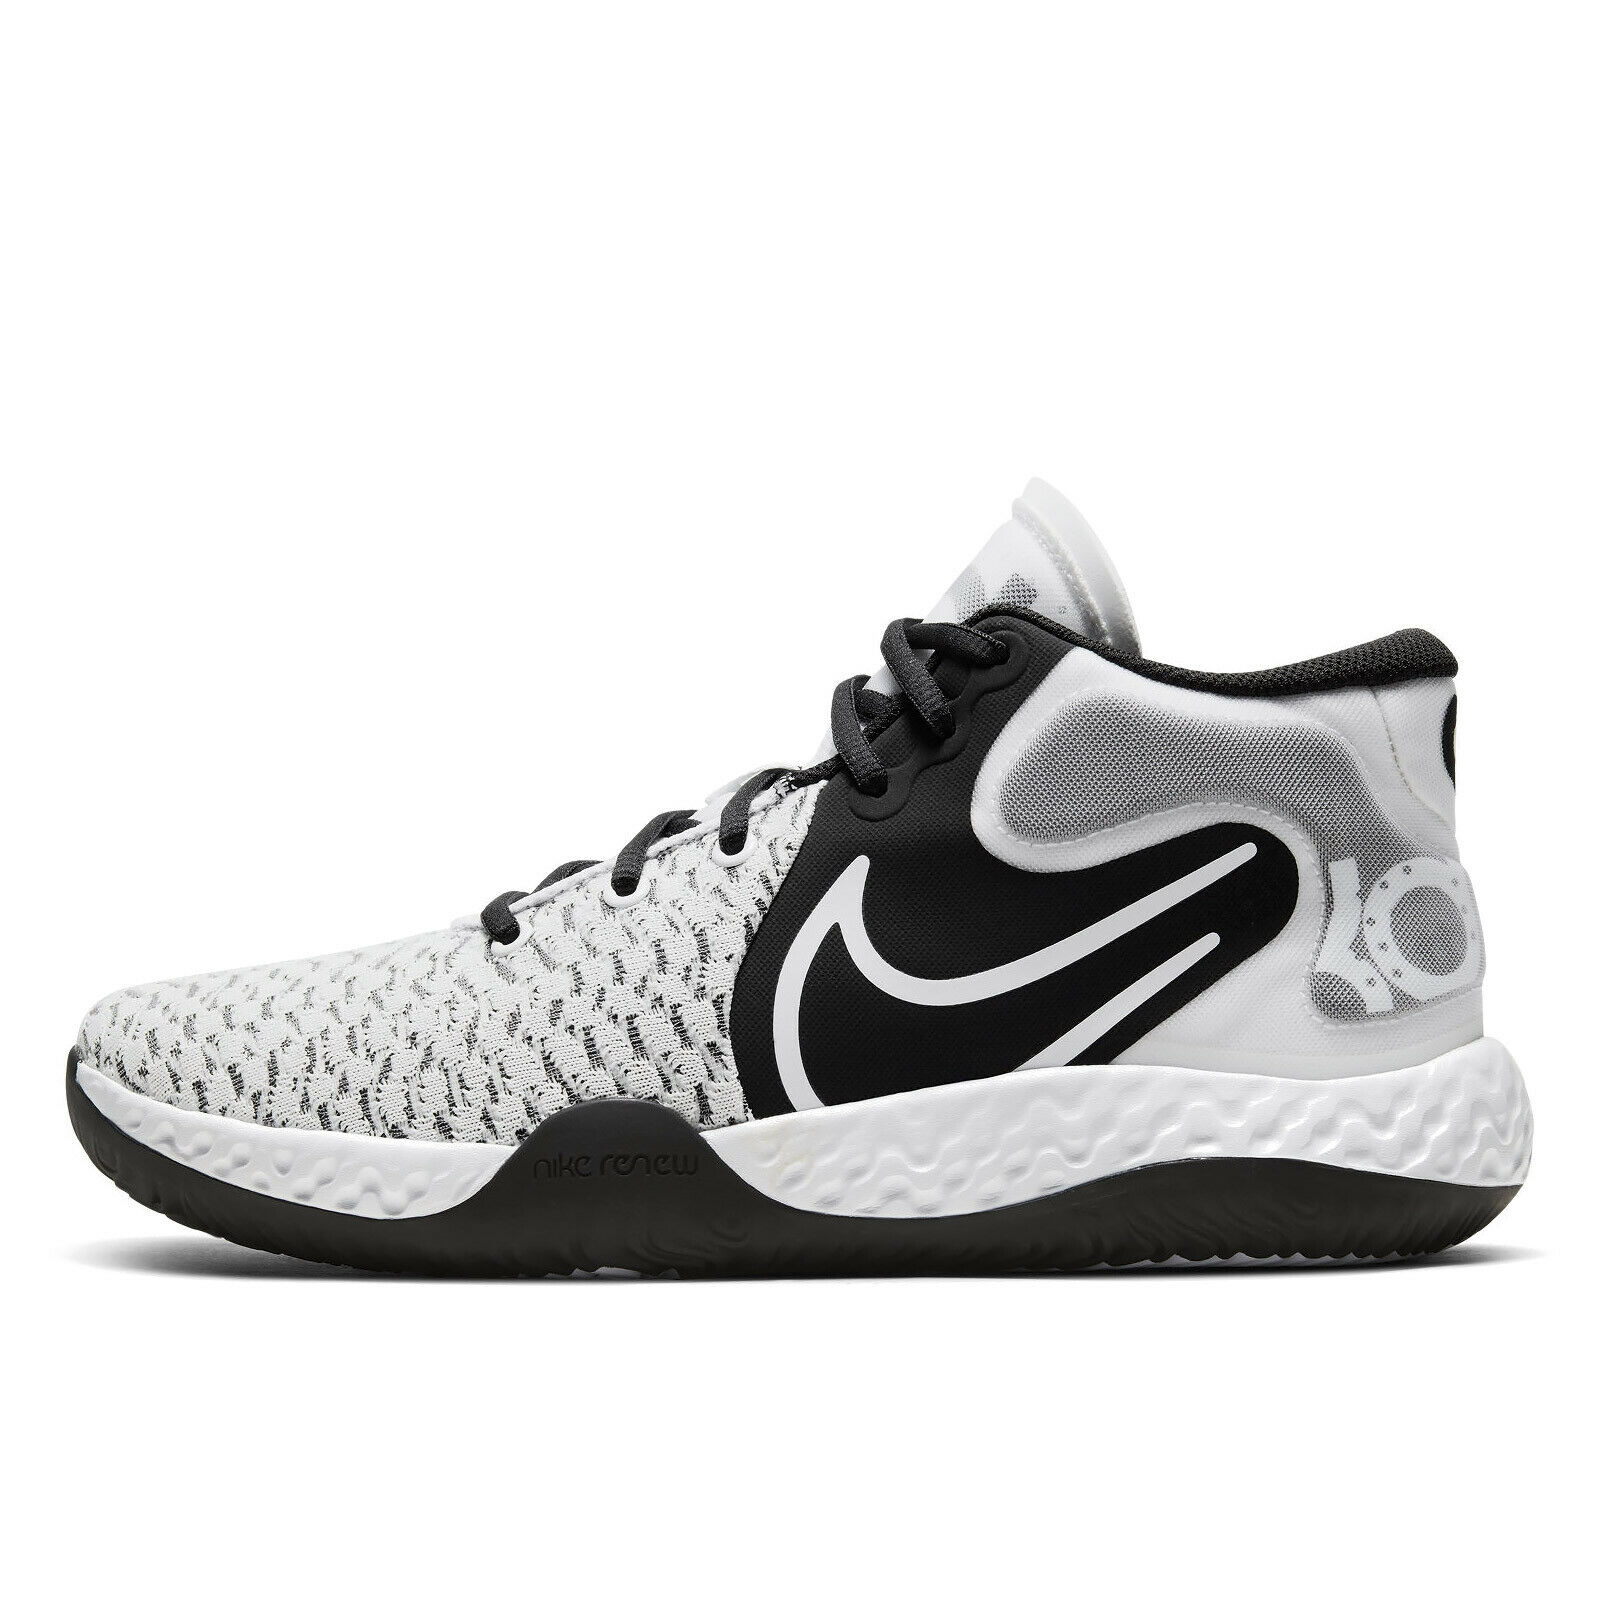 Nike KD Trey 5 VIII Basketball Shoes, White Black, Size: Mens 5 / Womens 6.5